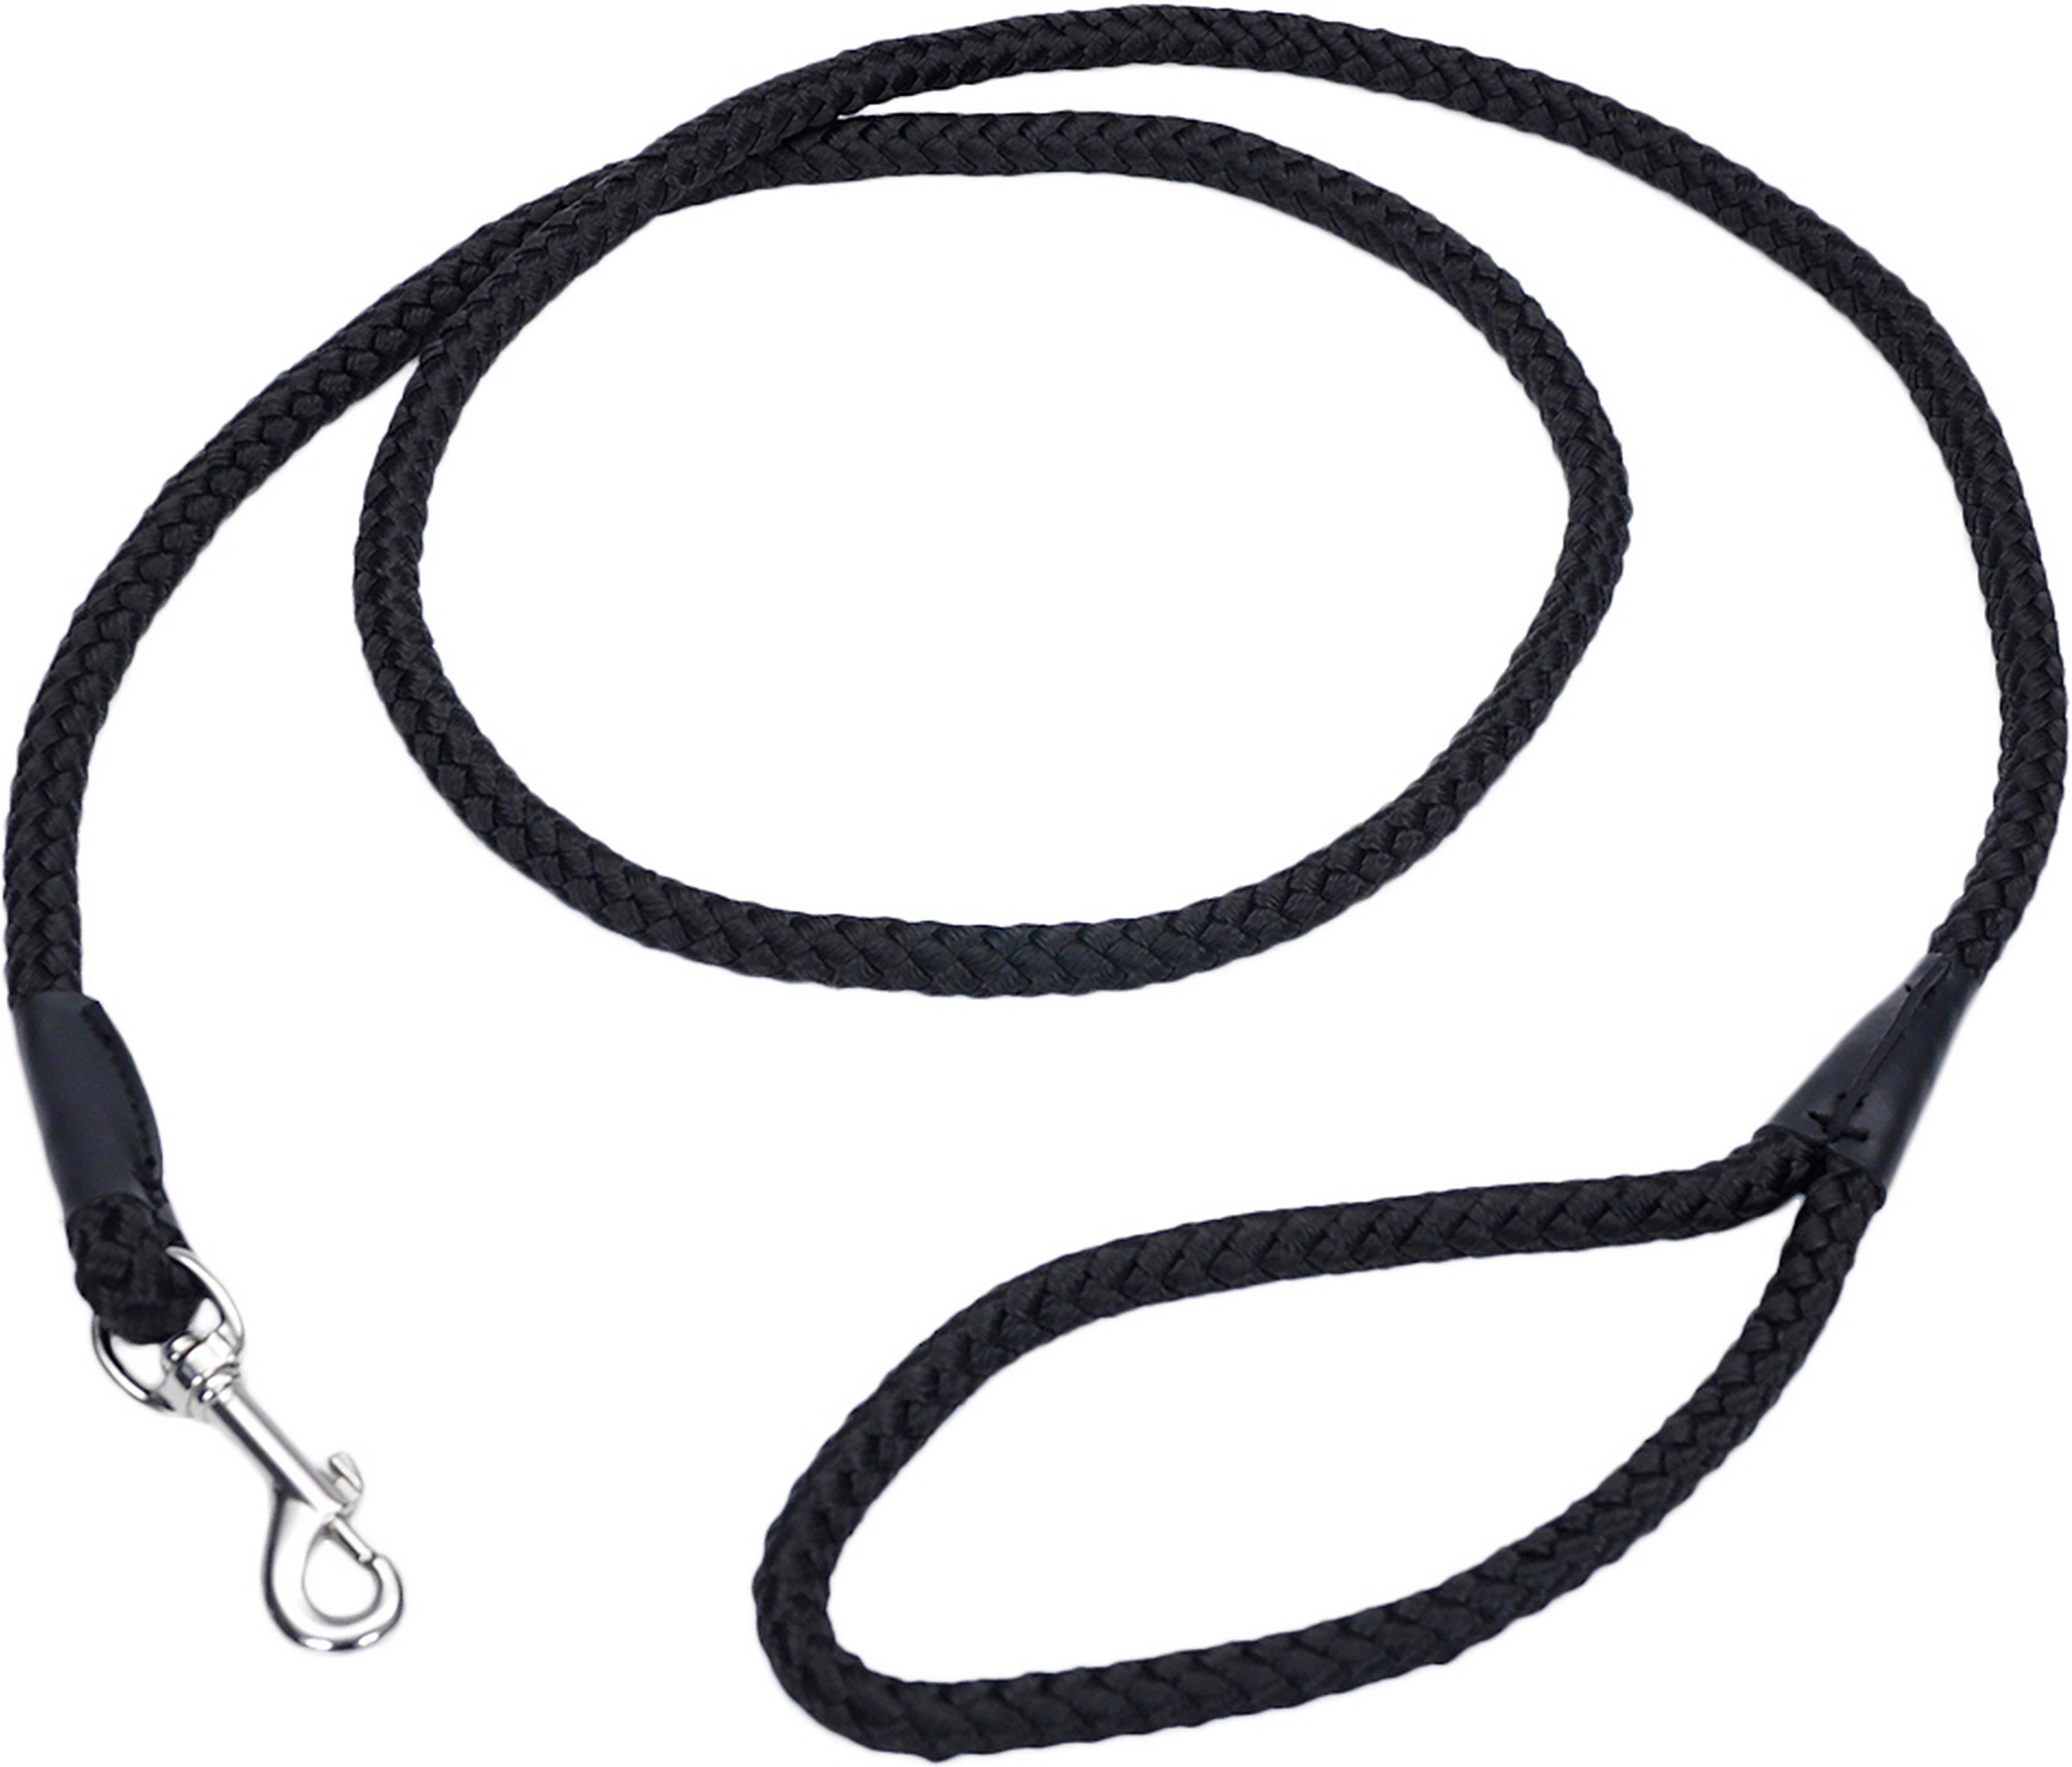 Coastal Pet Rope Dog Leash - 6', Black